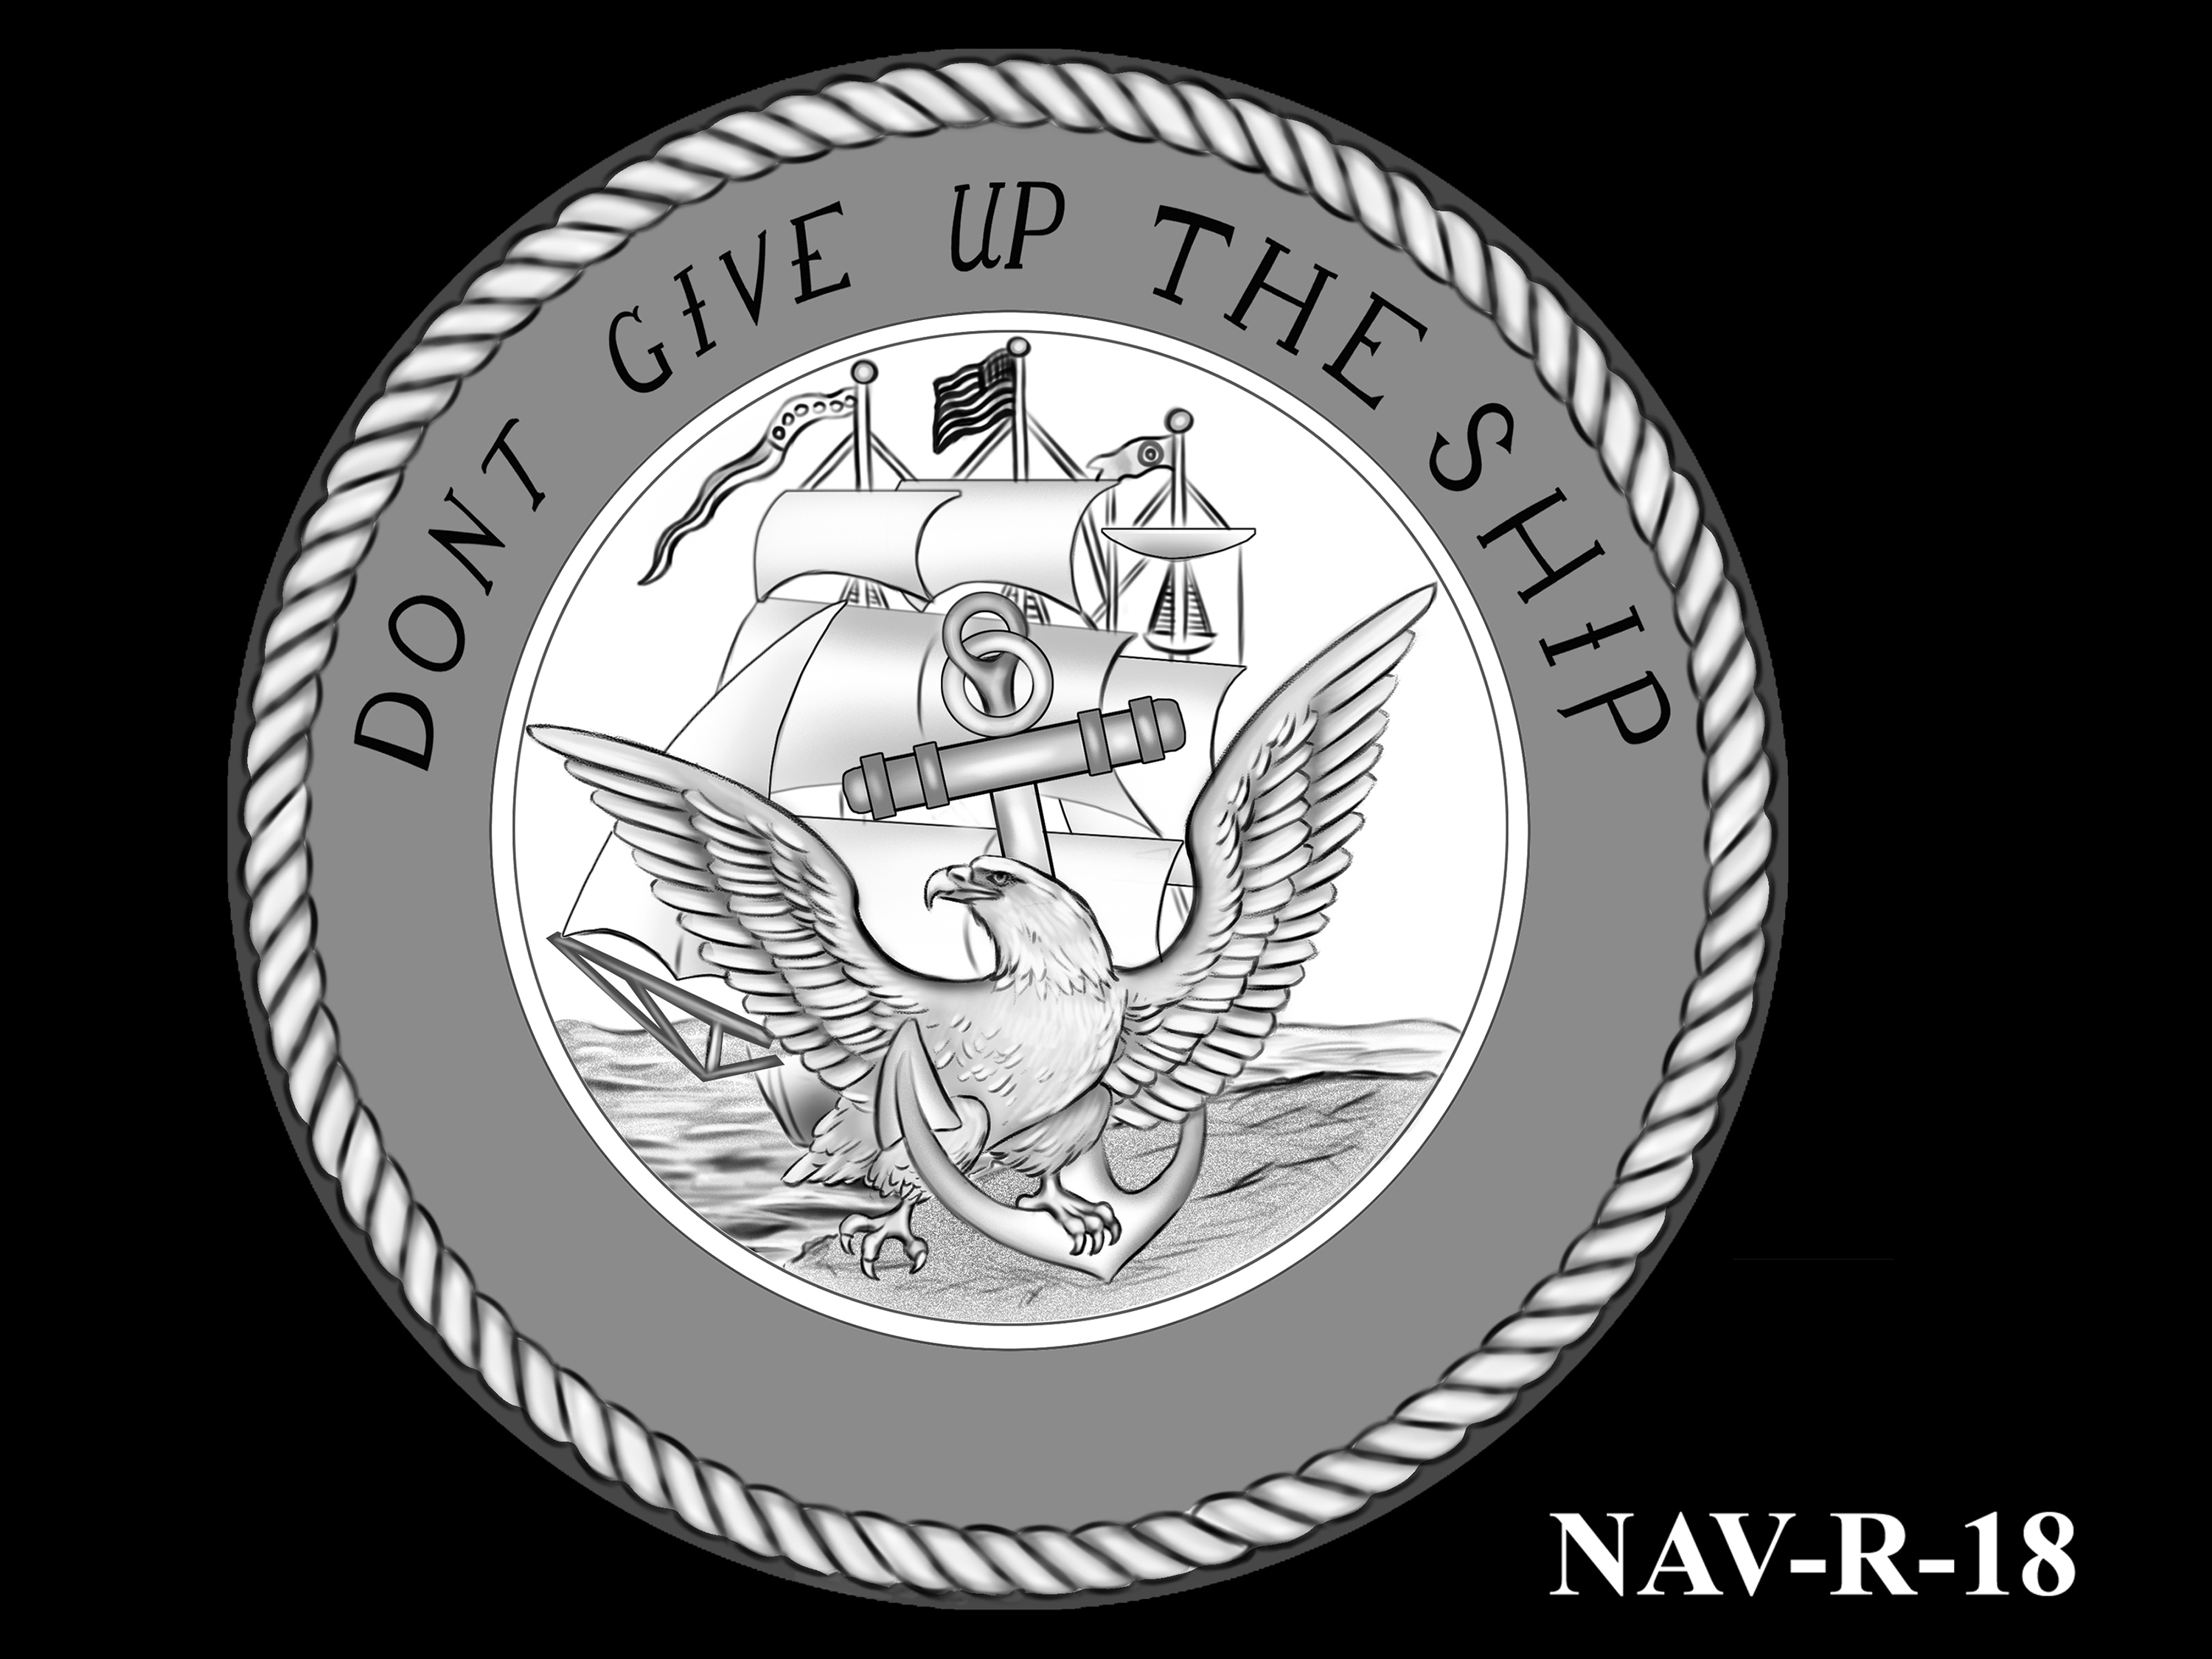 NAV-R-18 -- 2021 United States Navy Silver Medal  - Reverse